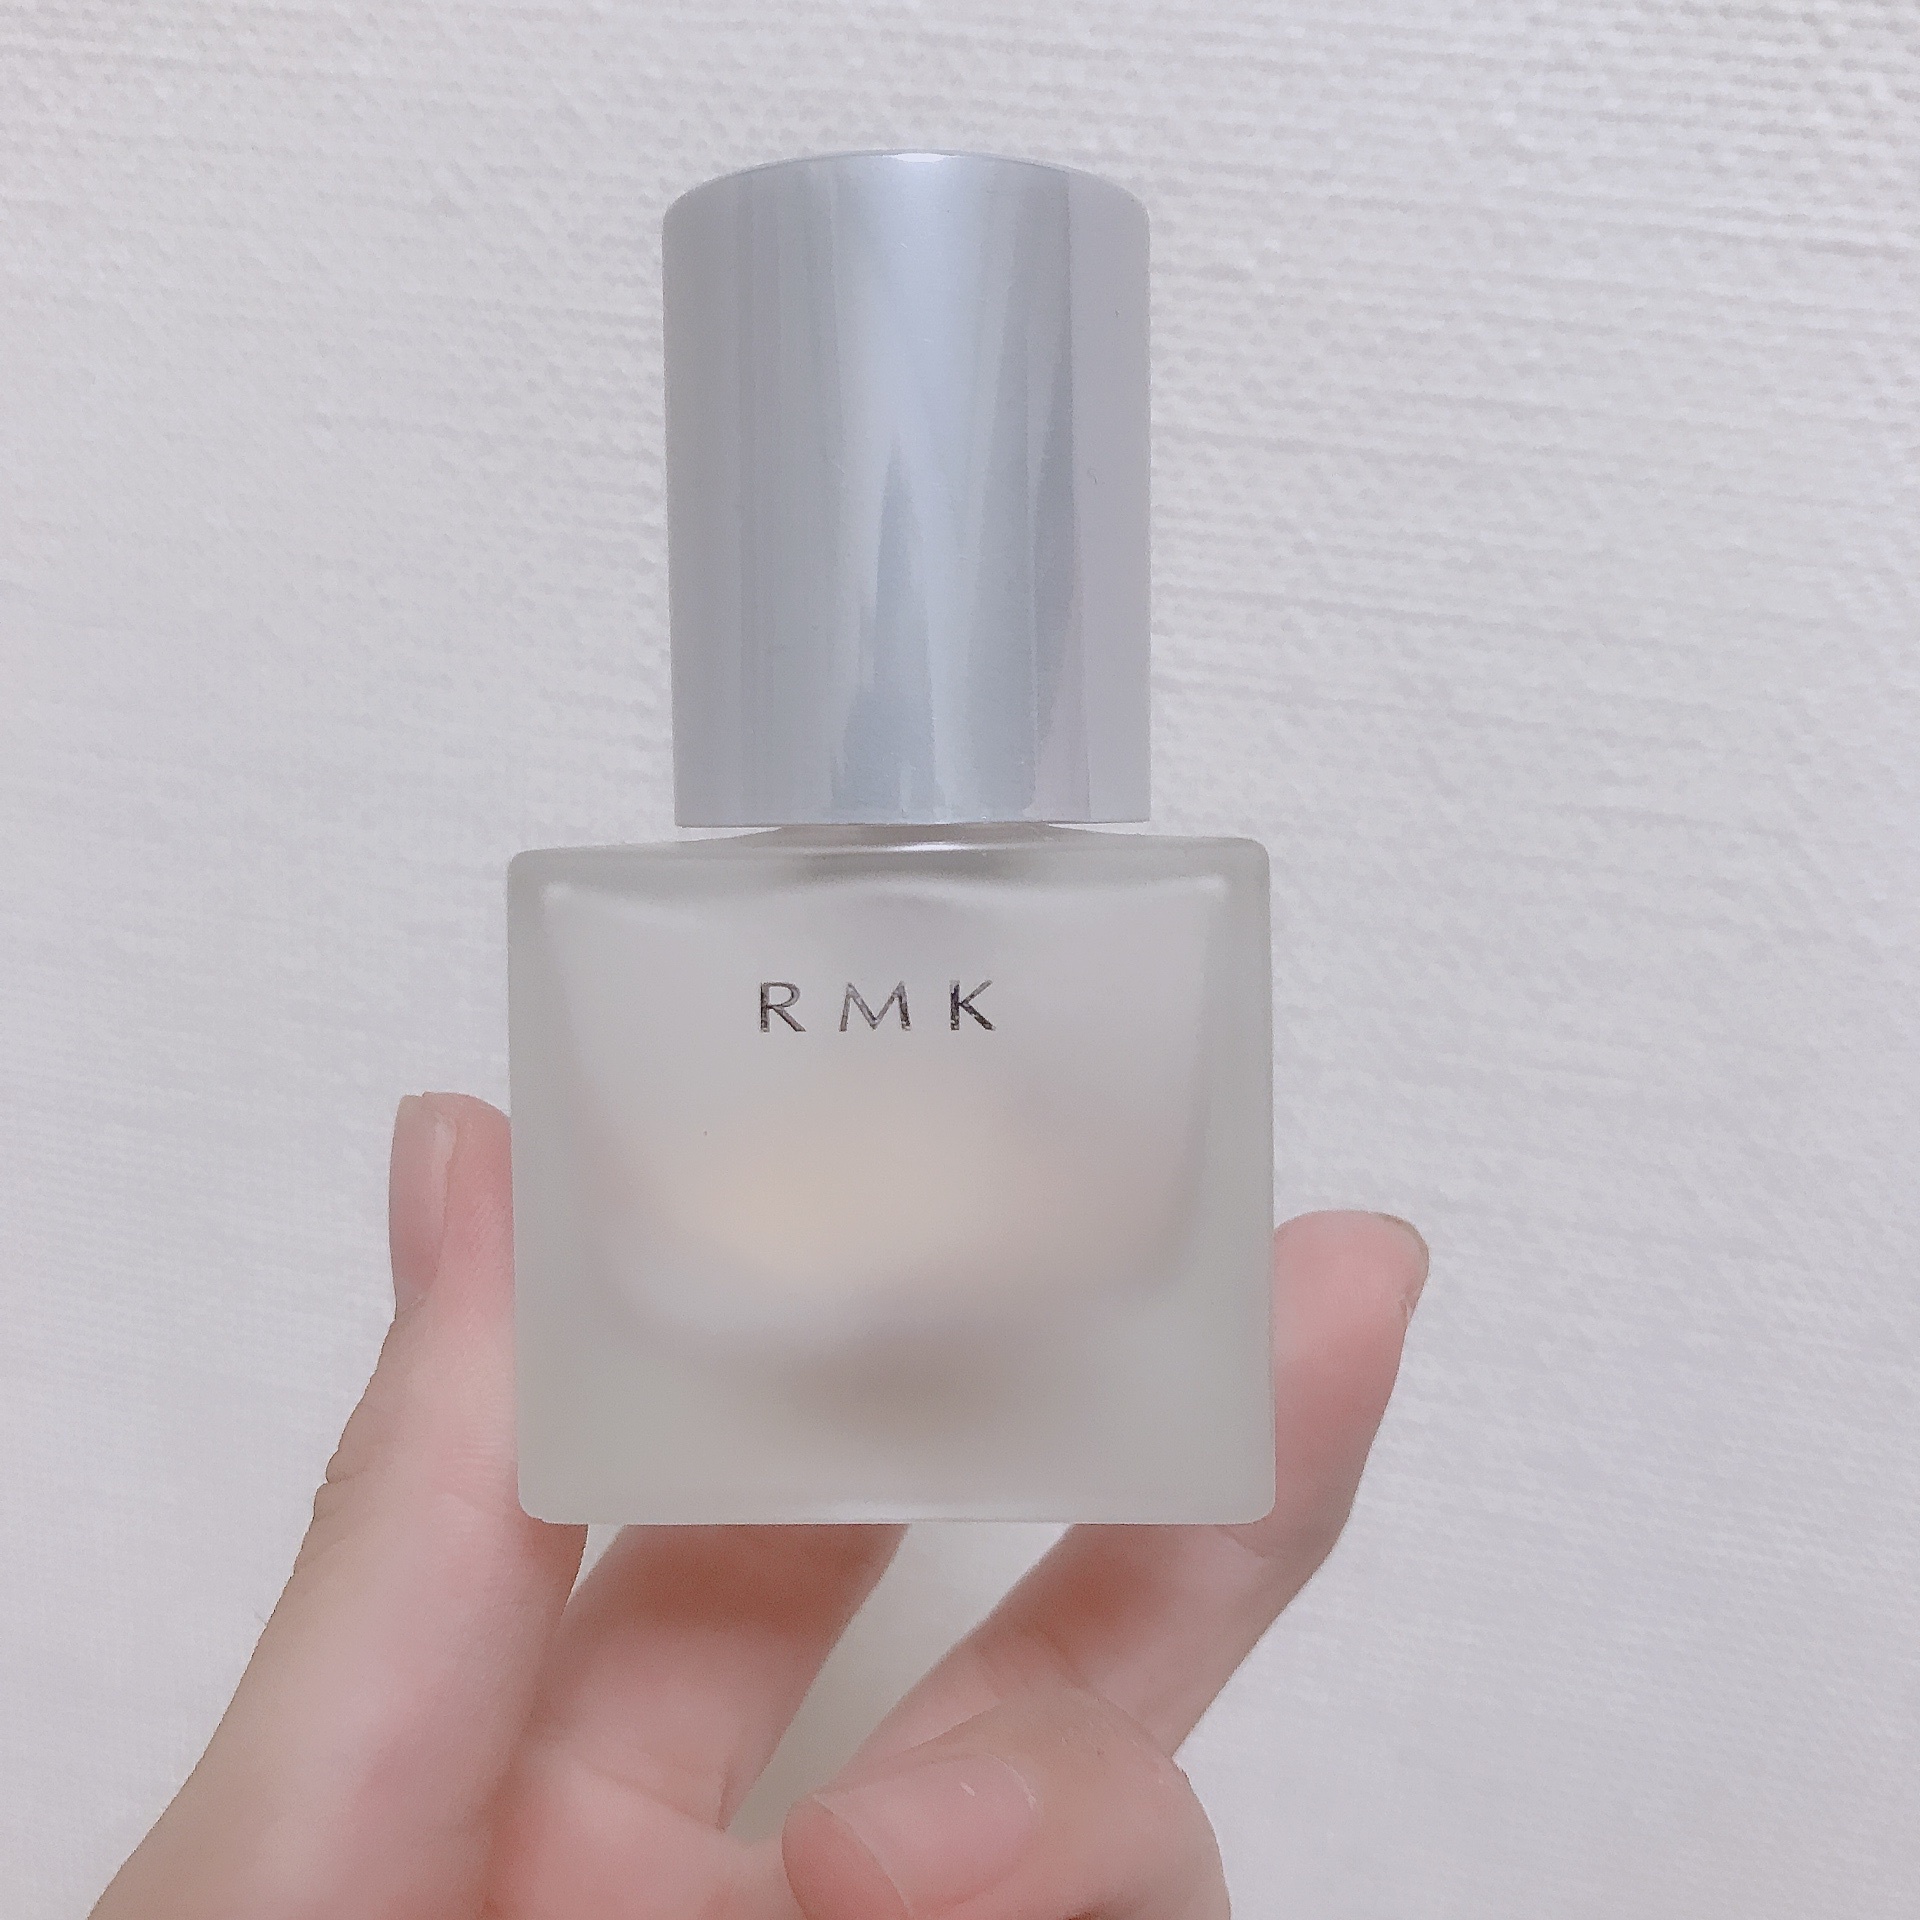 Rmk メイクアップベースの口コミ写真 By Akarin さん 1枚目 美容 化粧品情報はアットコスメ